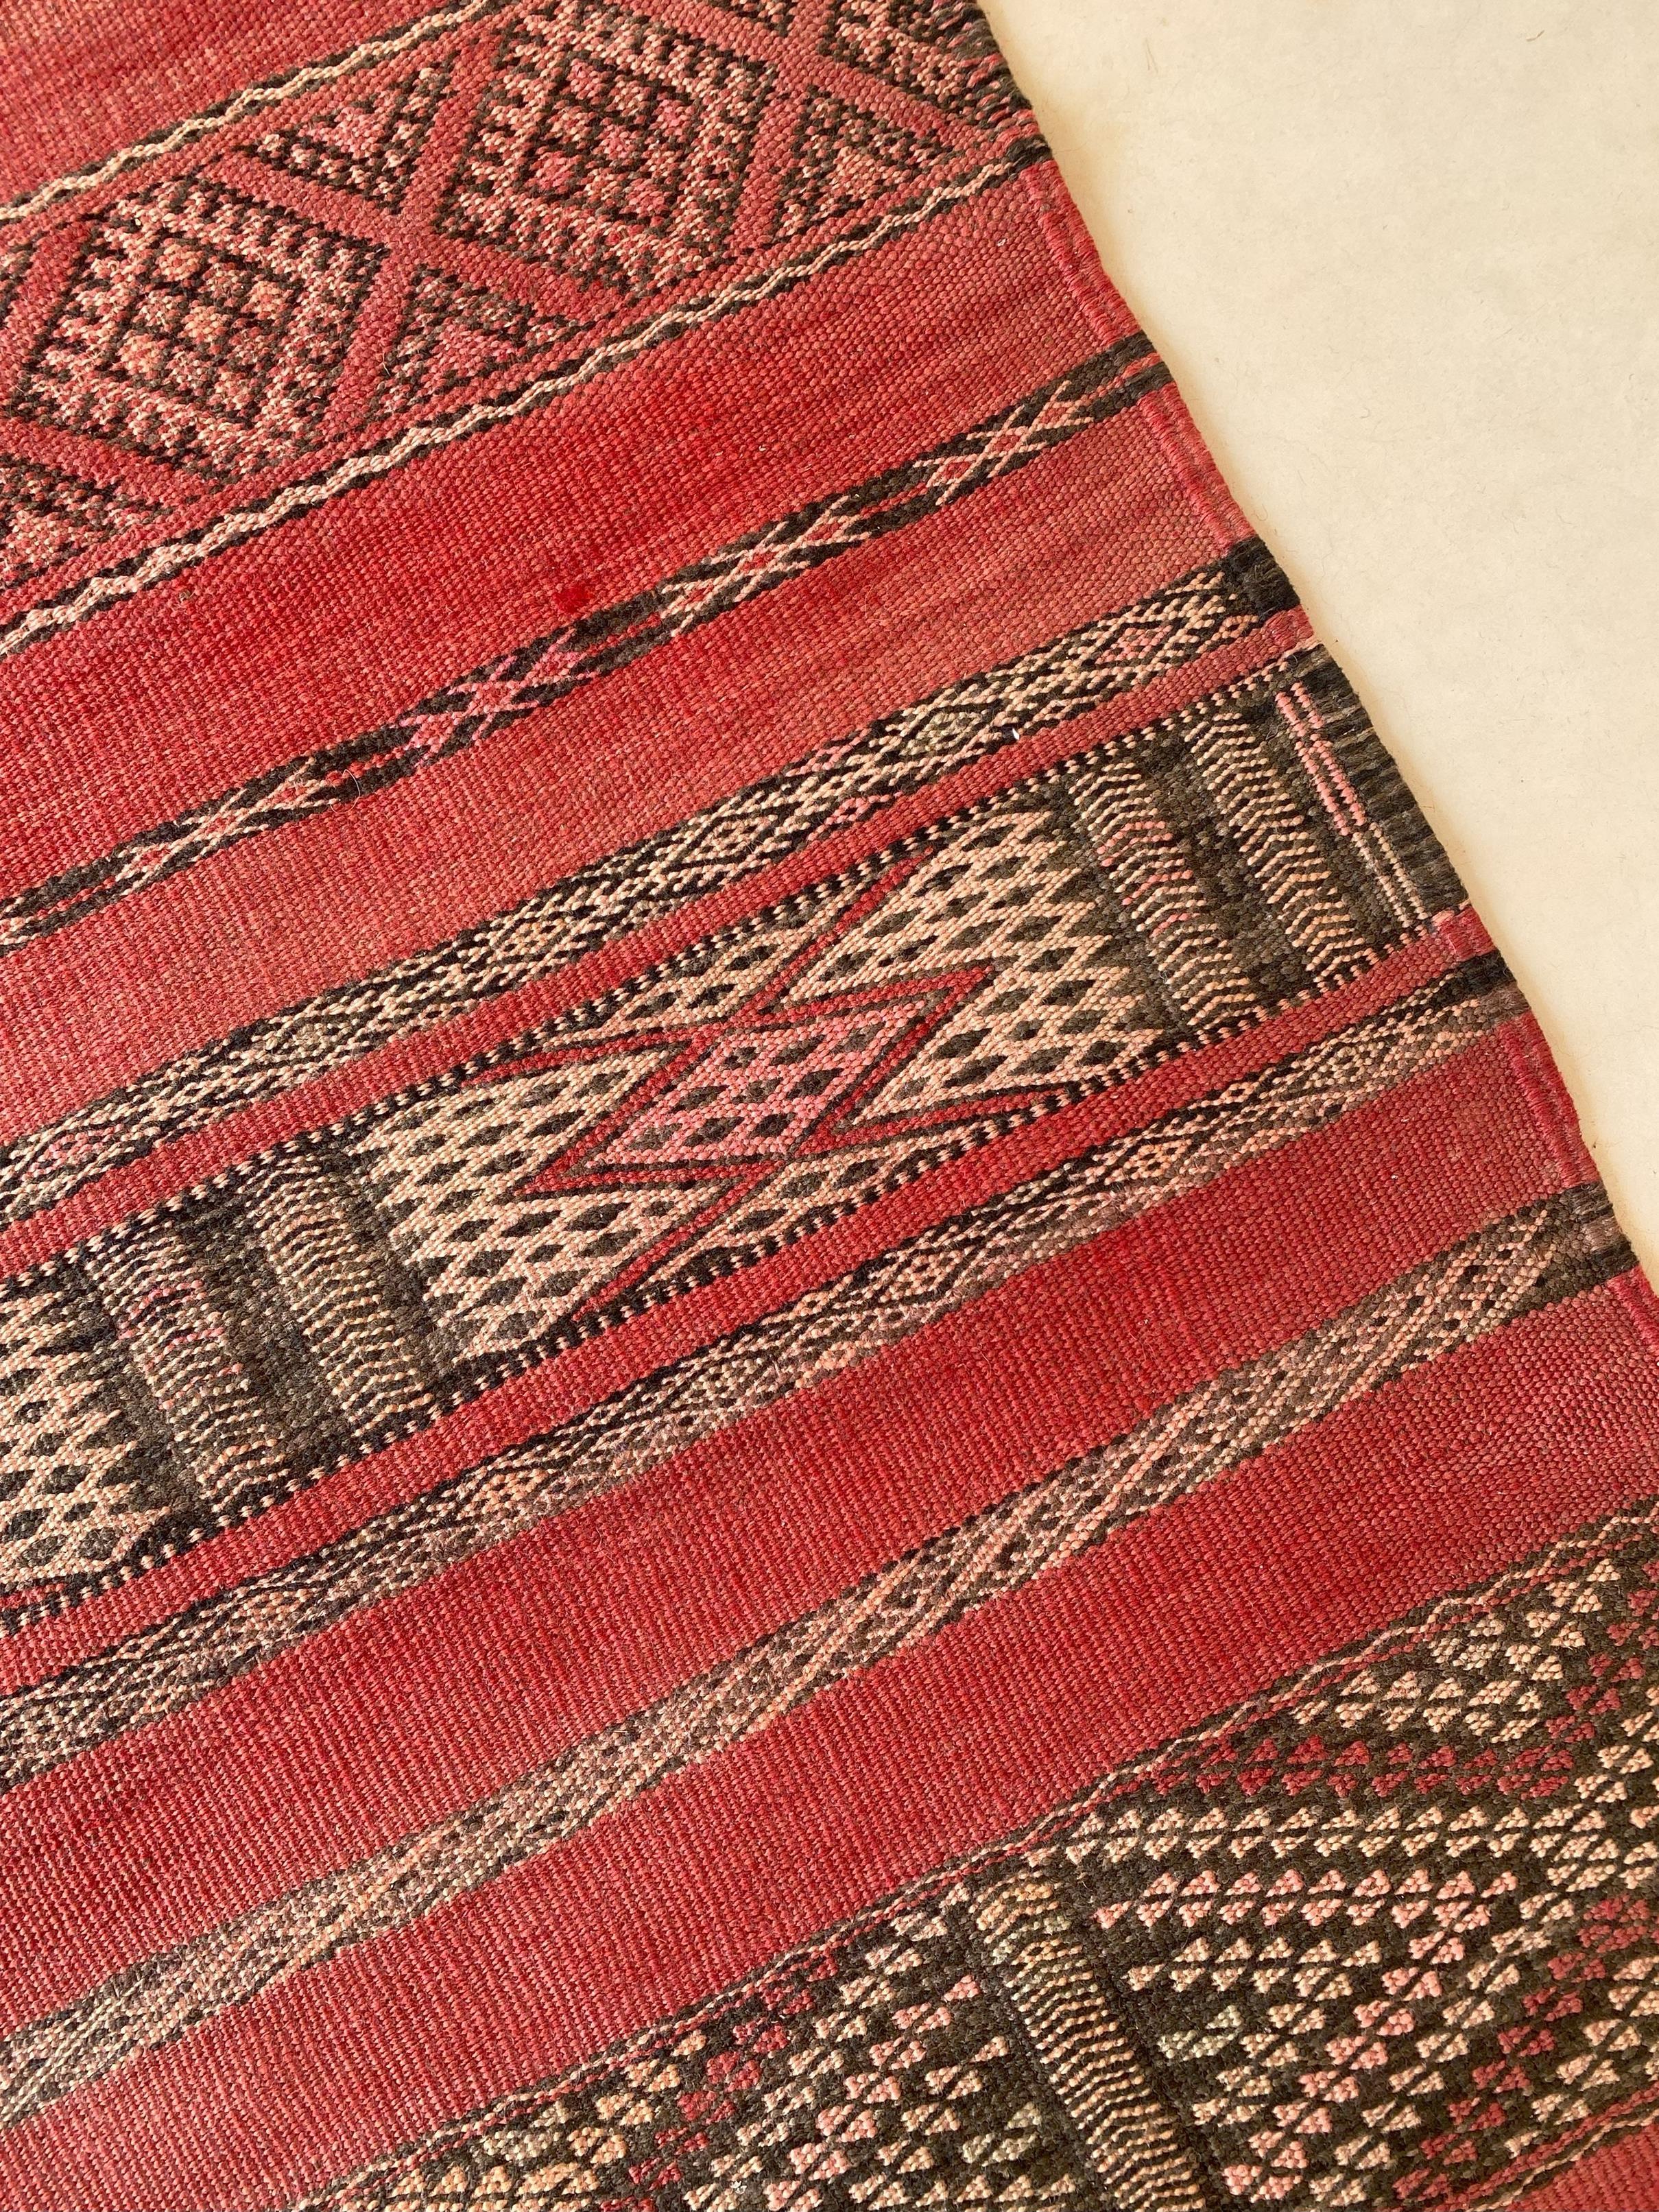 Vintage Moroccan Kilim rug - Red - 5x9.2feet / 152x282cm For Sale 4